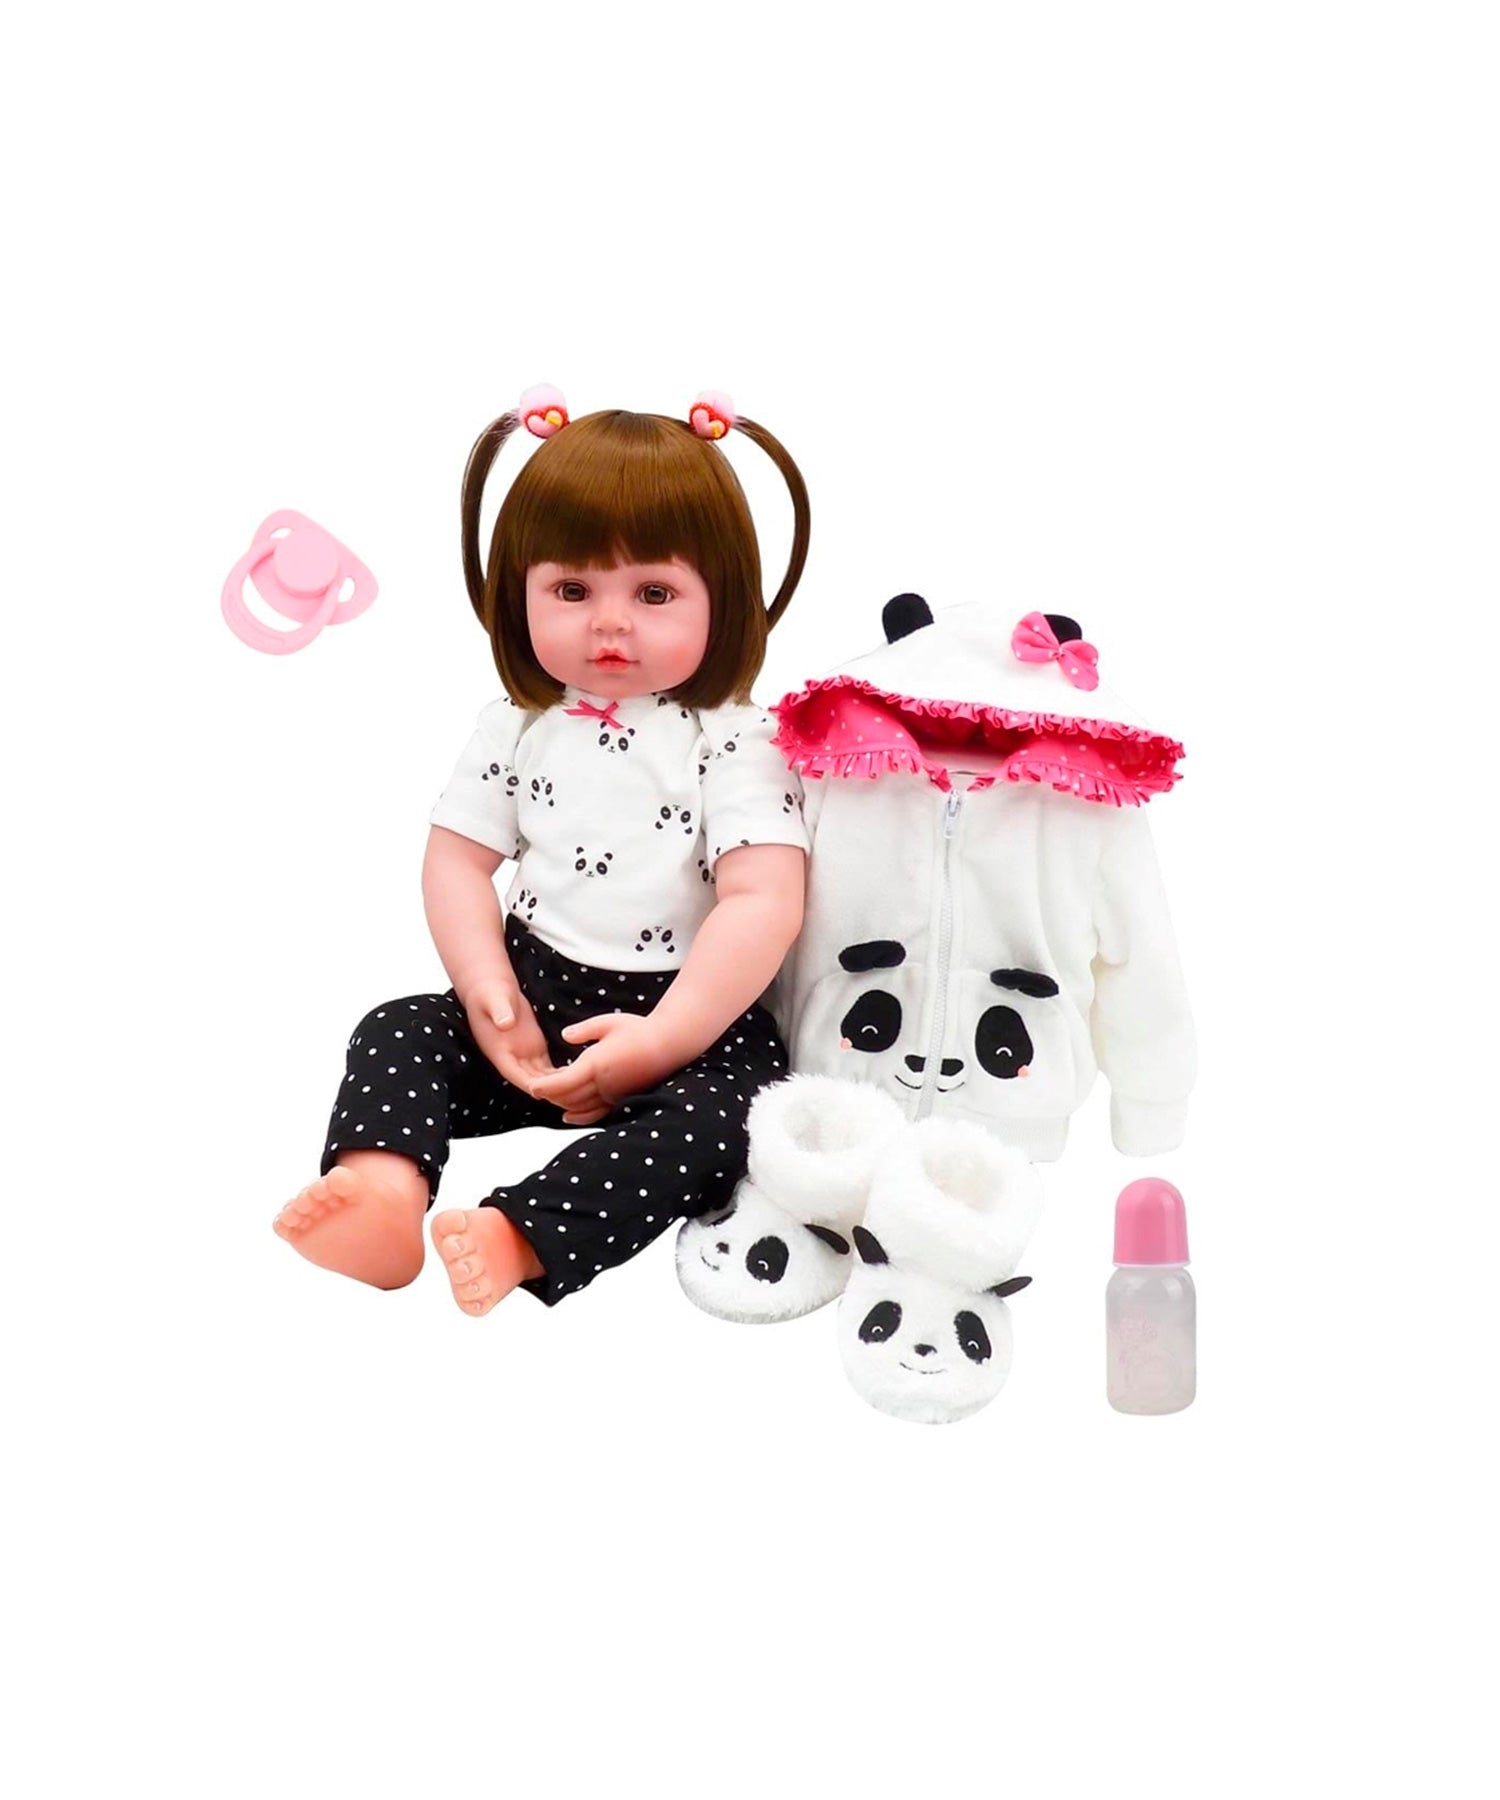 Boneca Bebê Reborn Laura - Baby Bryan com Acessórios Brinquedos Bambalalão  Brinquedos Educativos